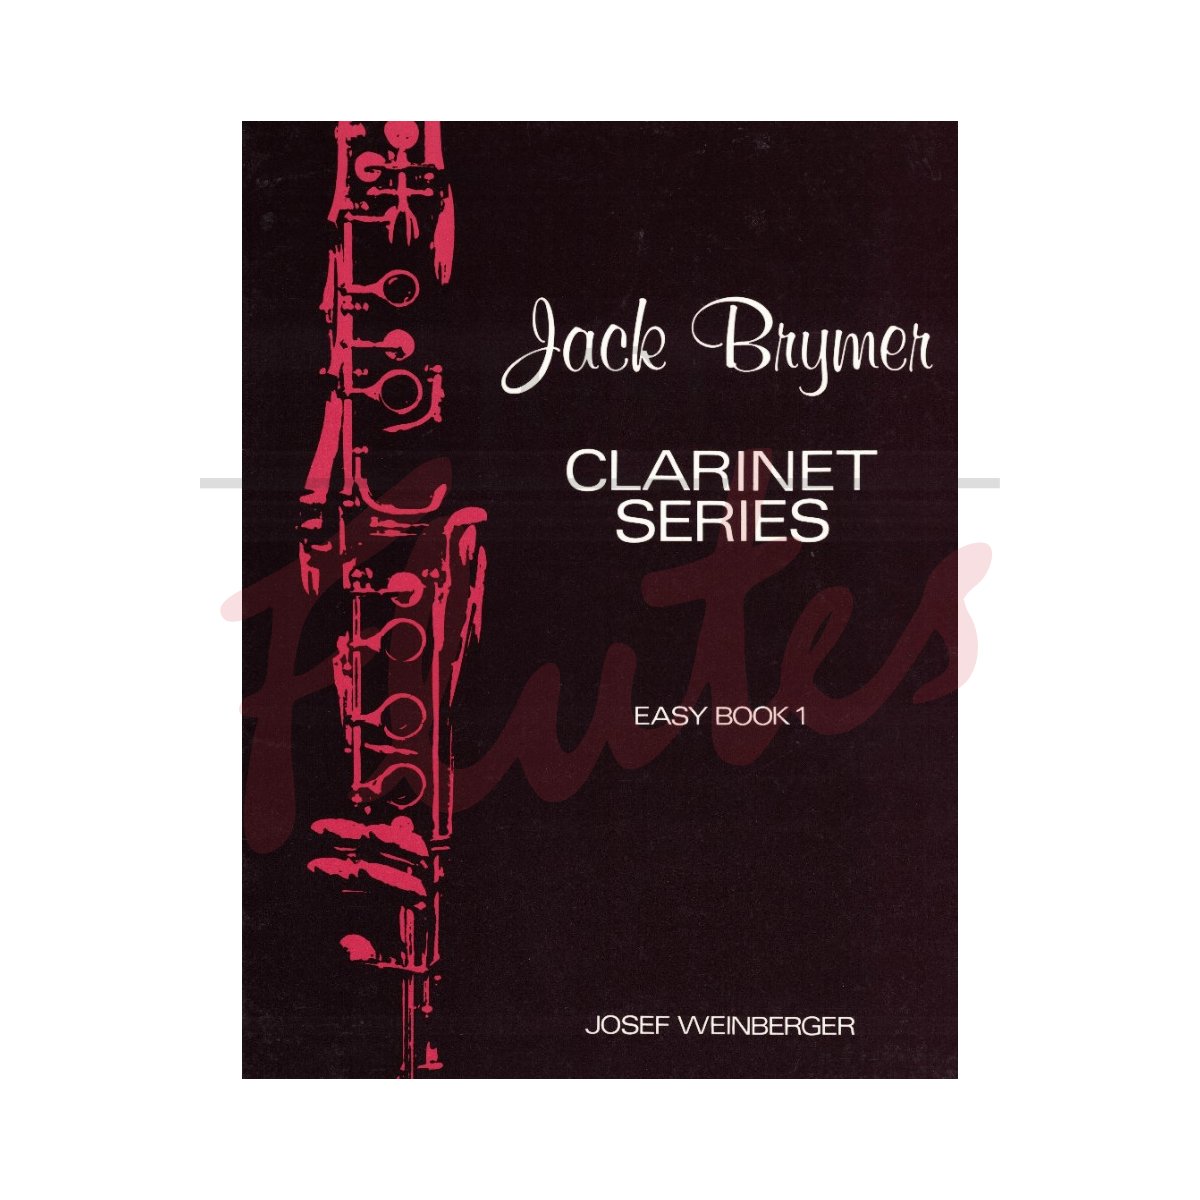 Clarinet Series Easy Book 1